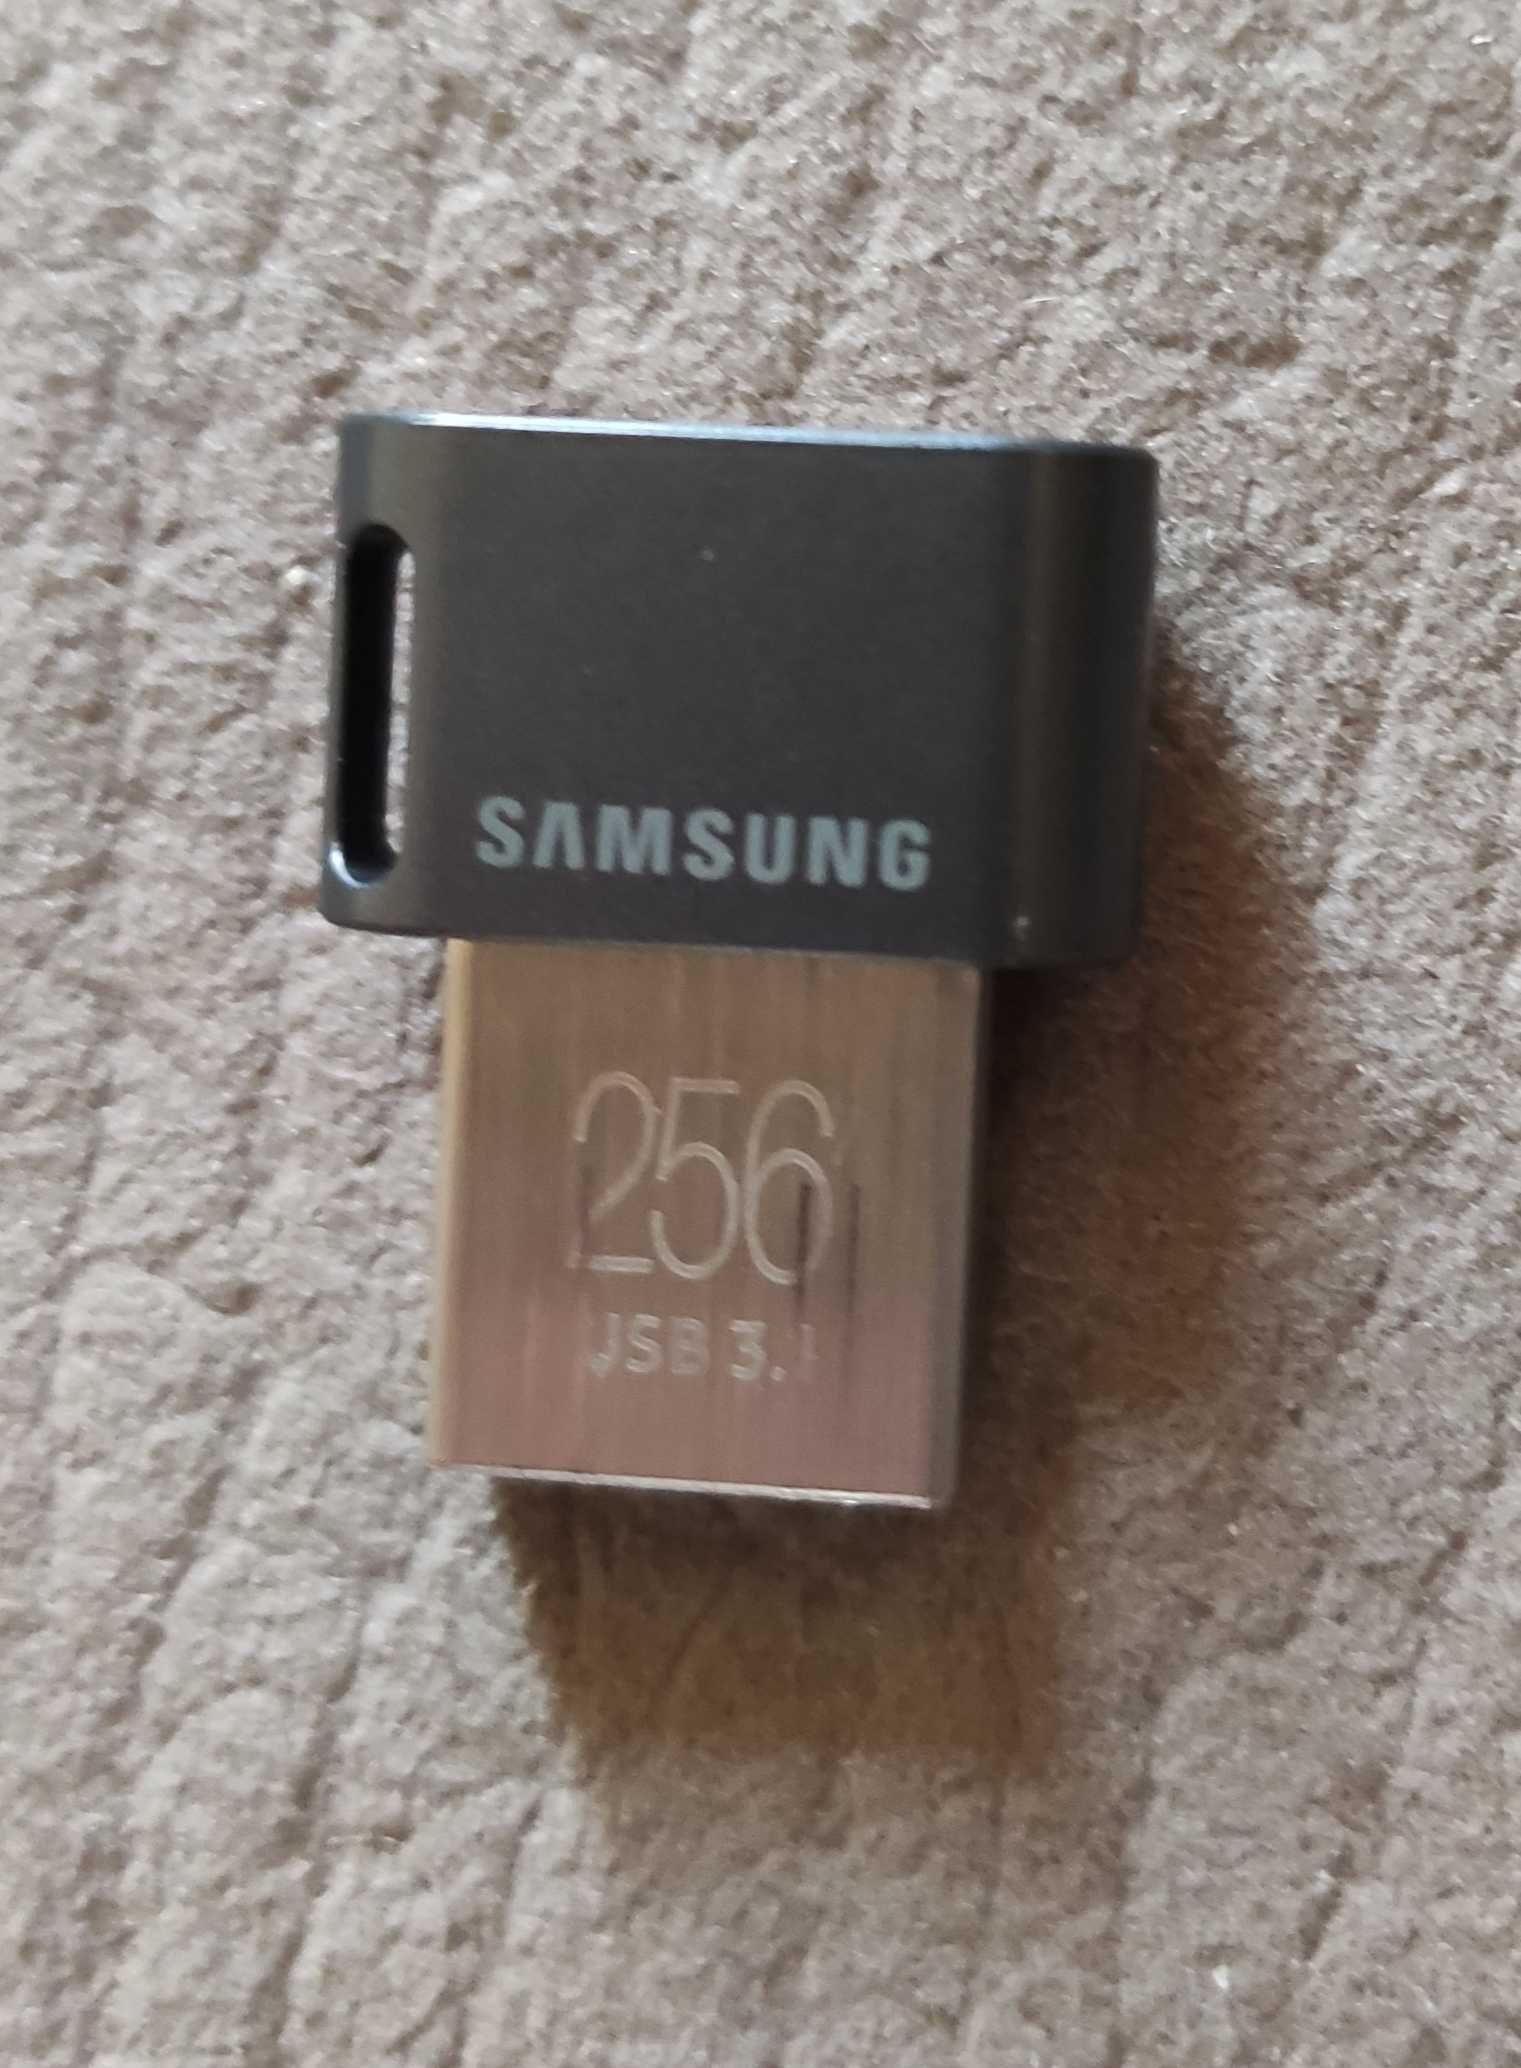 Флешка память USB Samsung Fit Plus USB 3.1 256GB